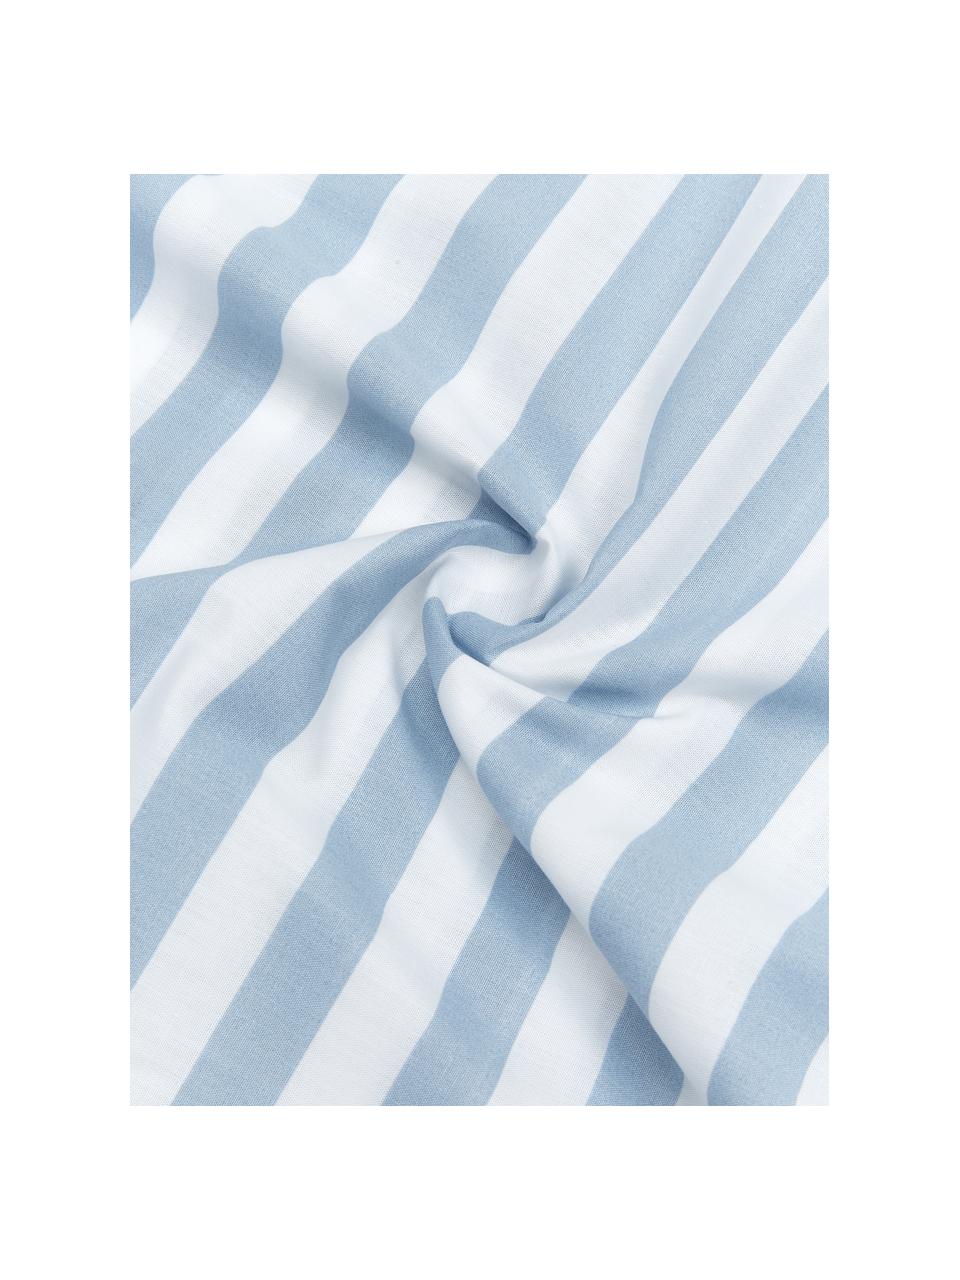 Gestreifte Baumwollperkal-Bettwäsche Yuliya Hellblau/Weiß, Webart: Perkal Fadendichte 180 TC, Blau, Weiß, 200 x 200 cm + 2 Kissen 80 x 80 cm